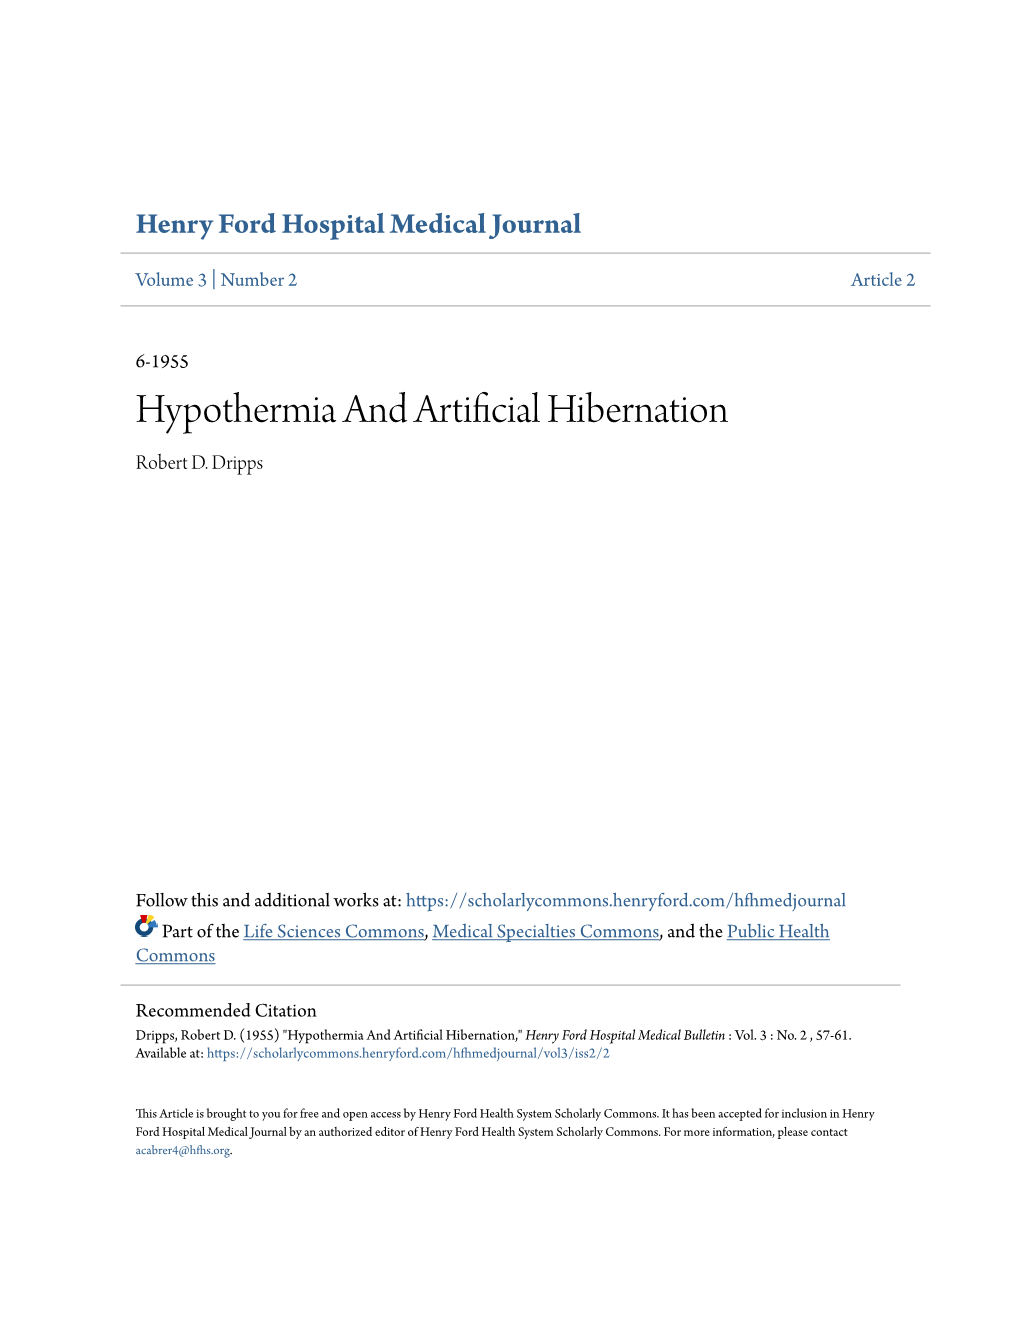 Hypothermia and Artificial Hibernation Robert D